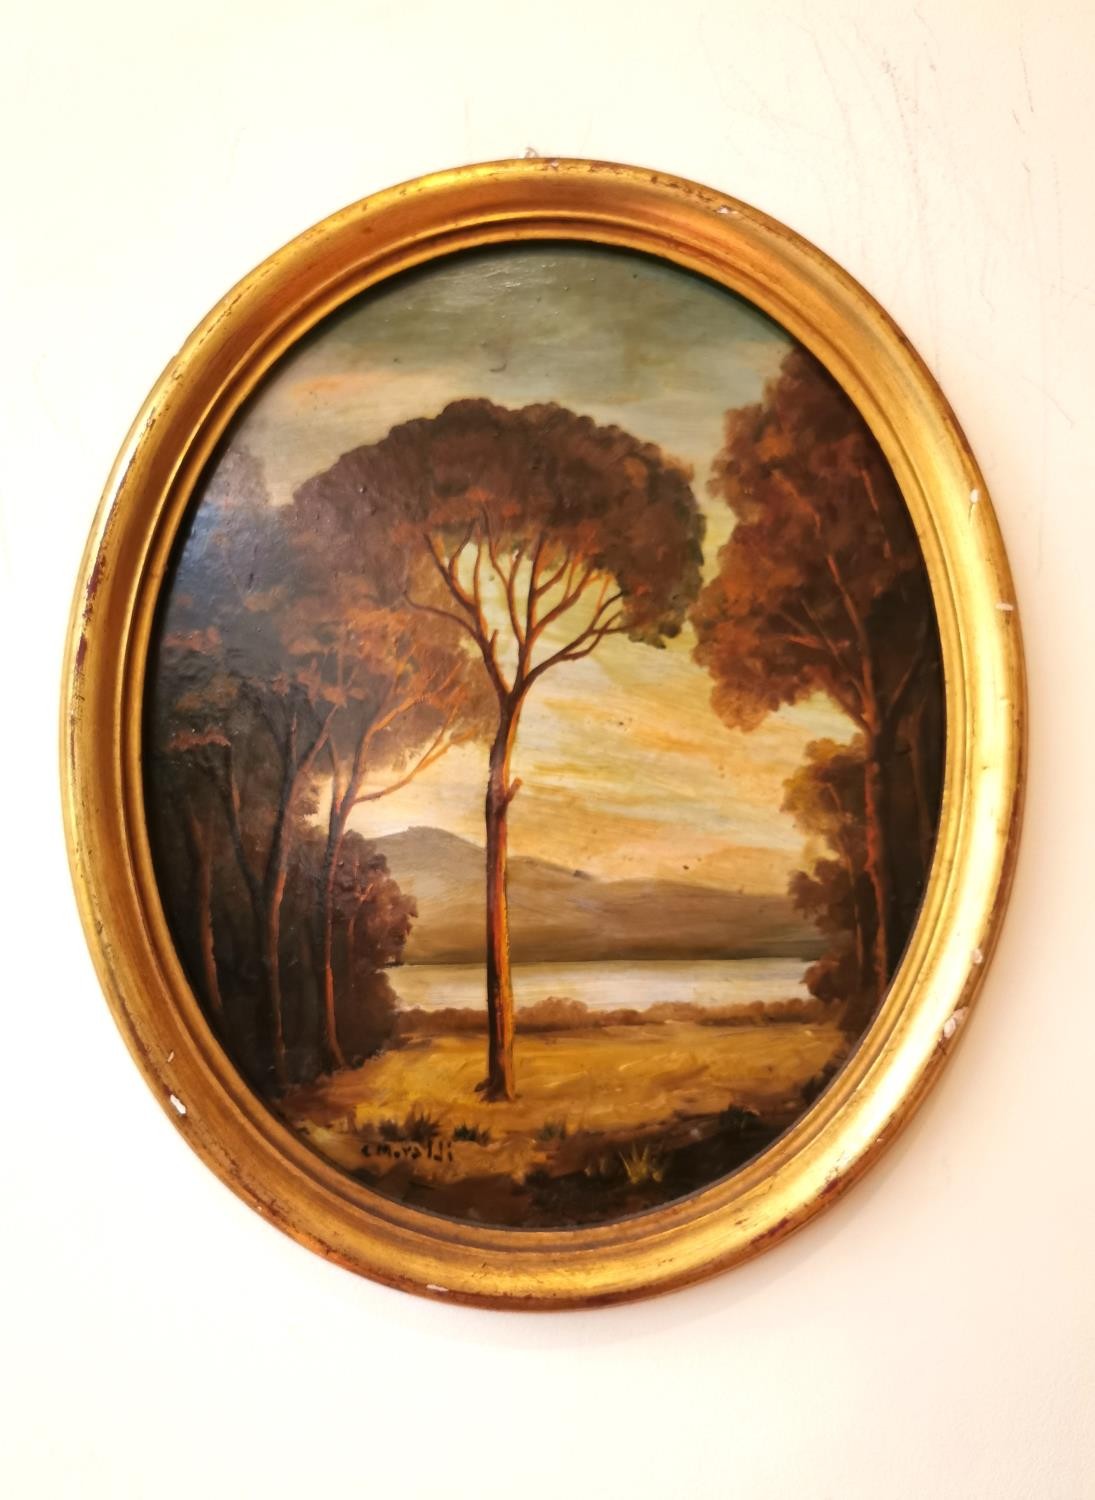 Two gilt framed oval oils on board depicting lake views, signed C.Moraldi. H.34 W.29cm - Image 2 of 13